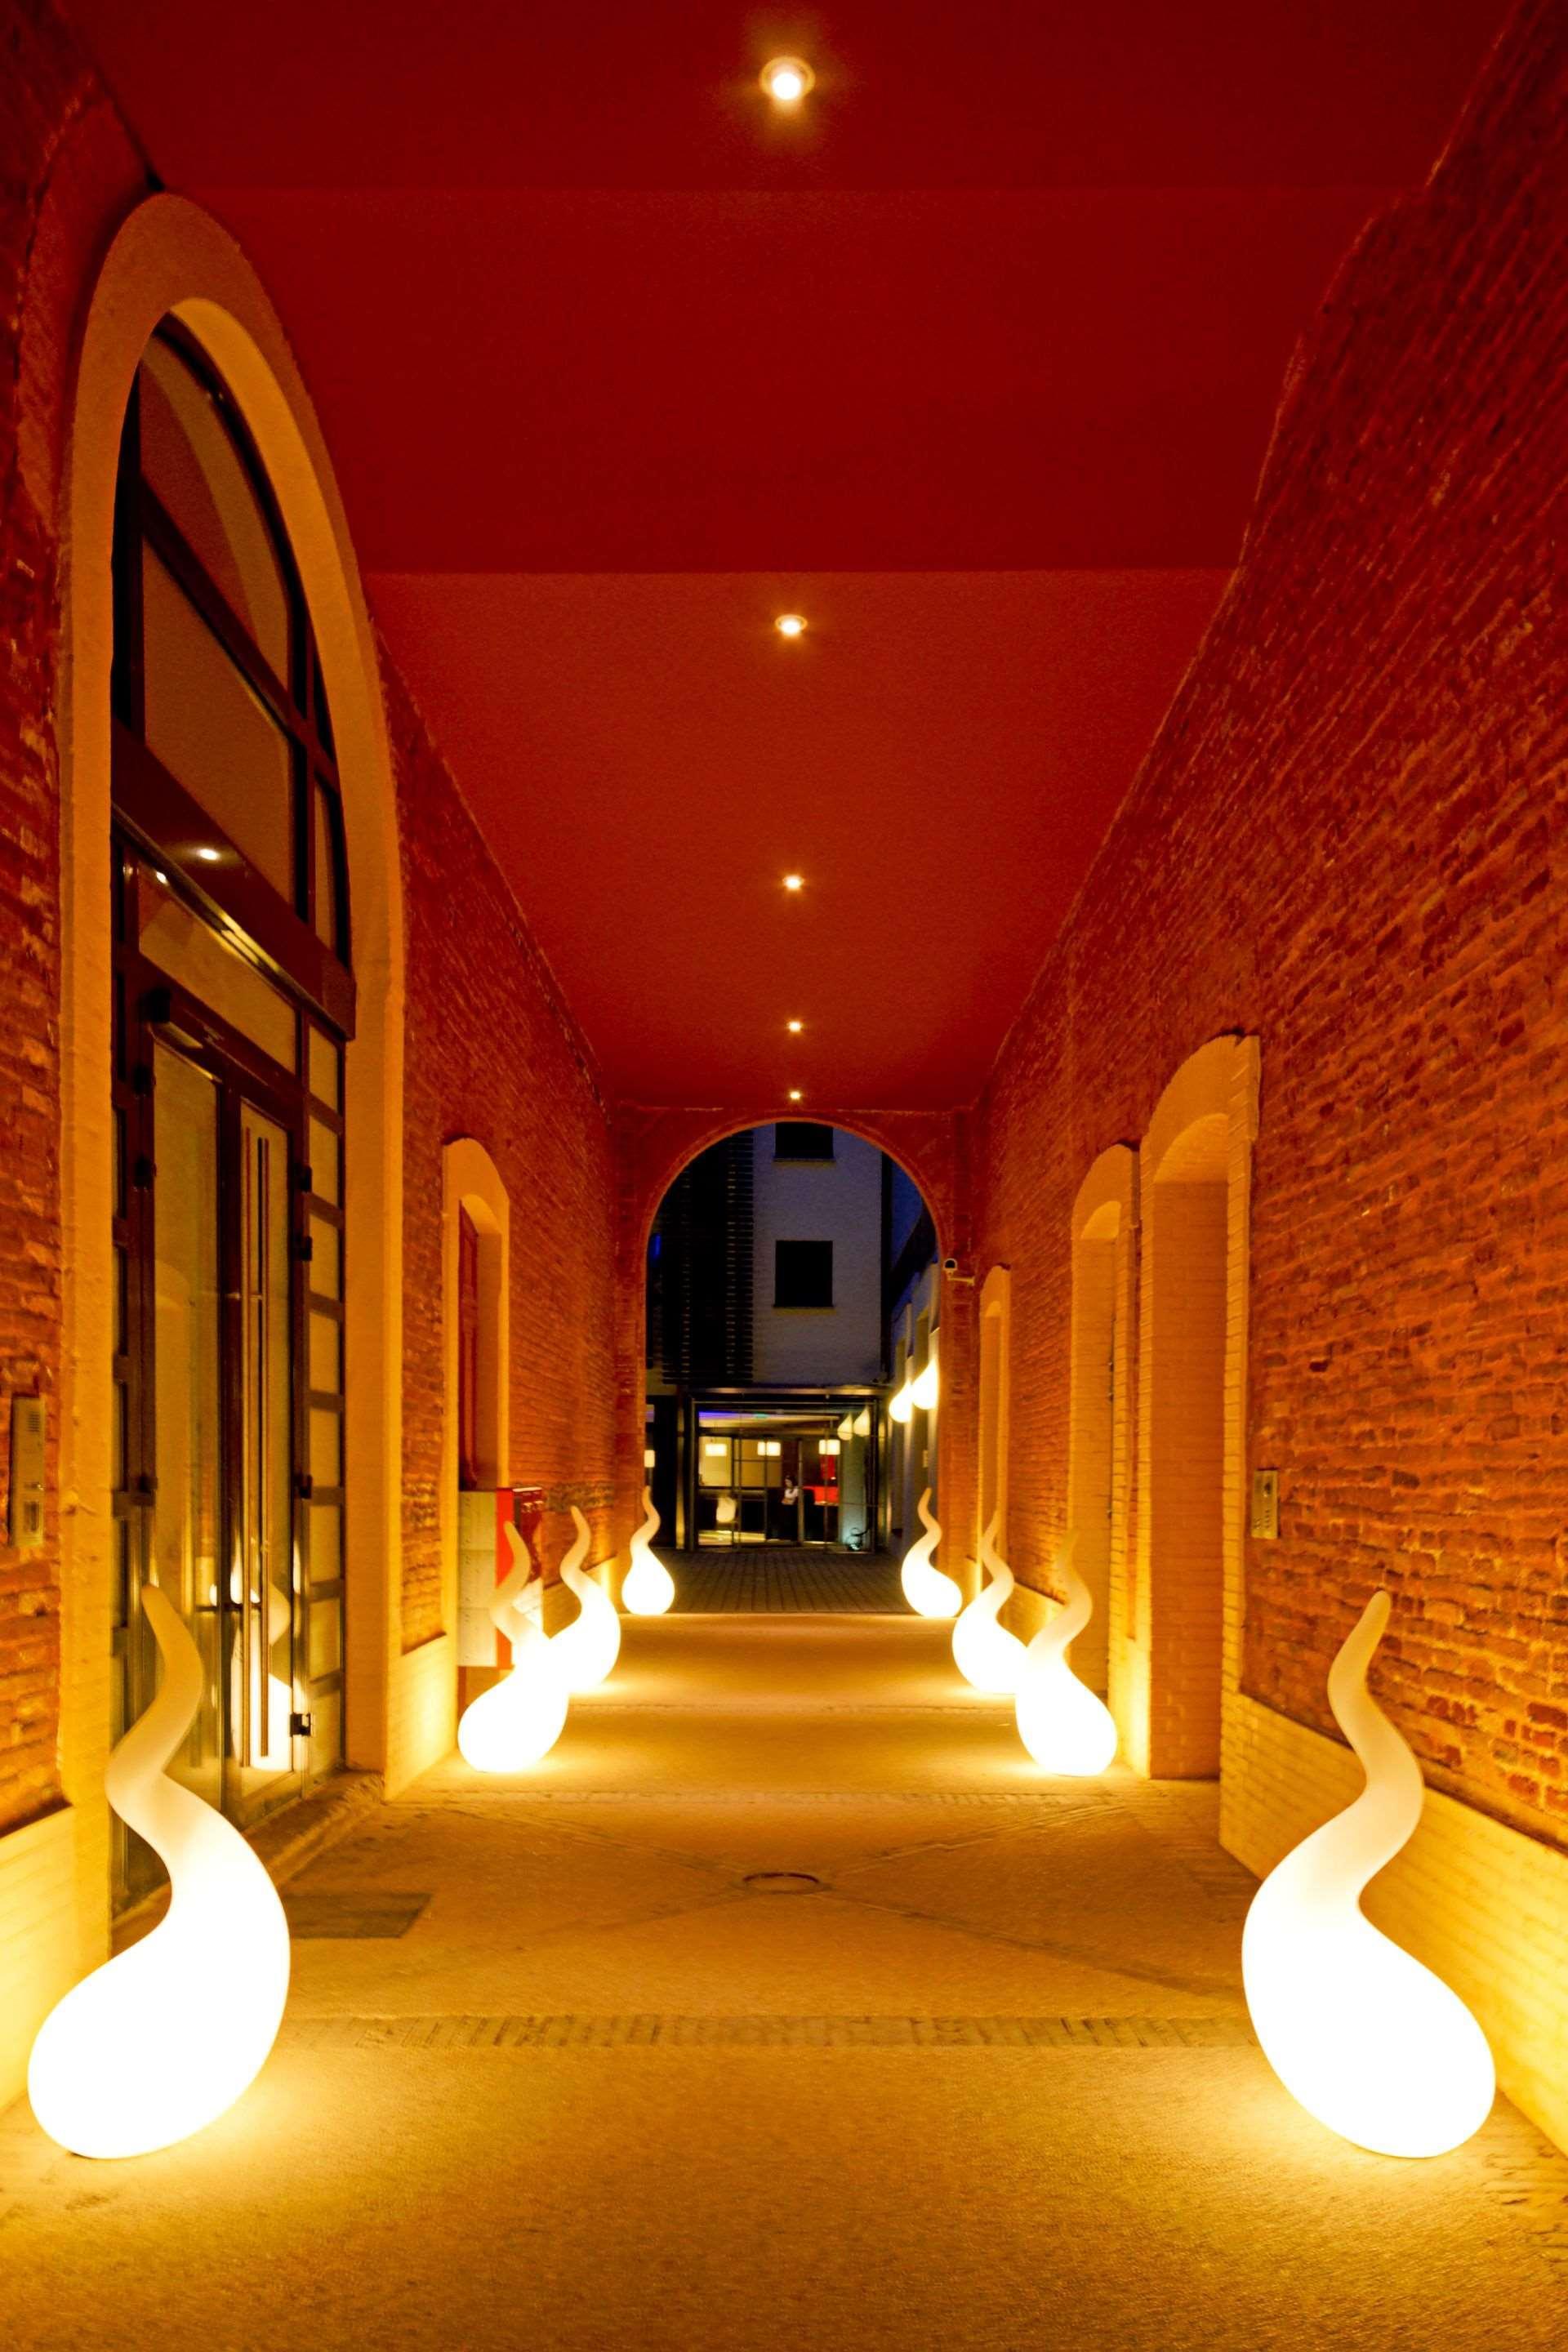 Appart Hotel Clement Ader Toulouse Kültér fotó